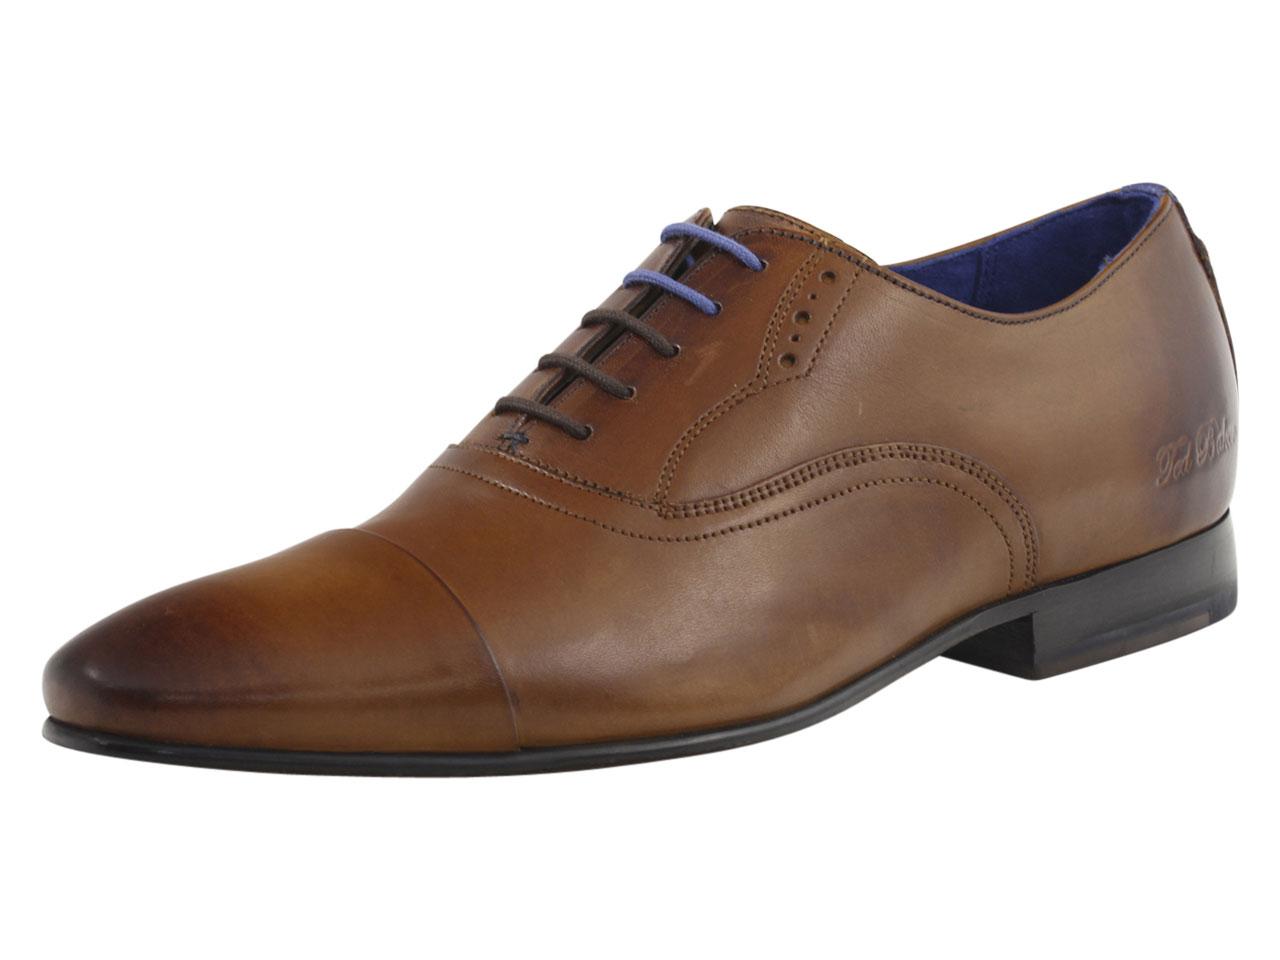 Ted Baker Men's Murain Fashion Oxfords Shoes - Brown - 8 D(M) US